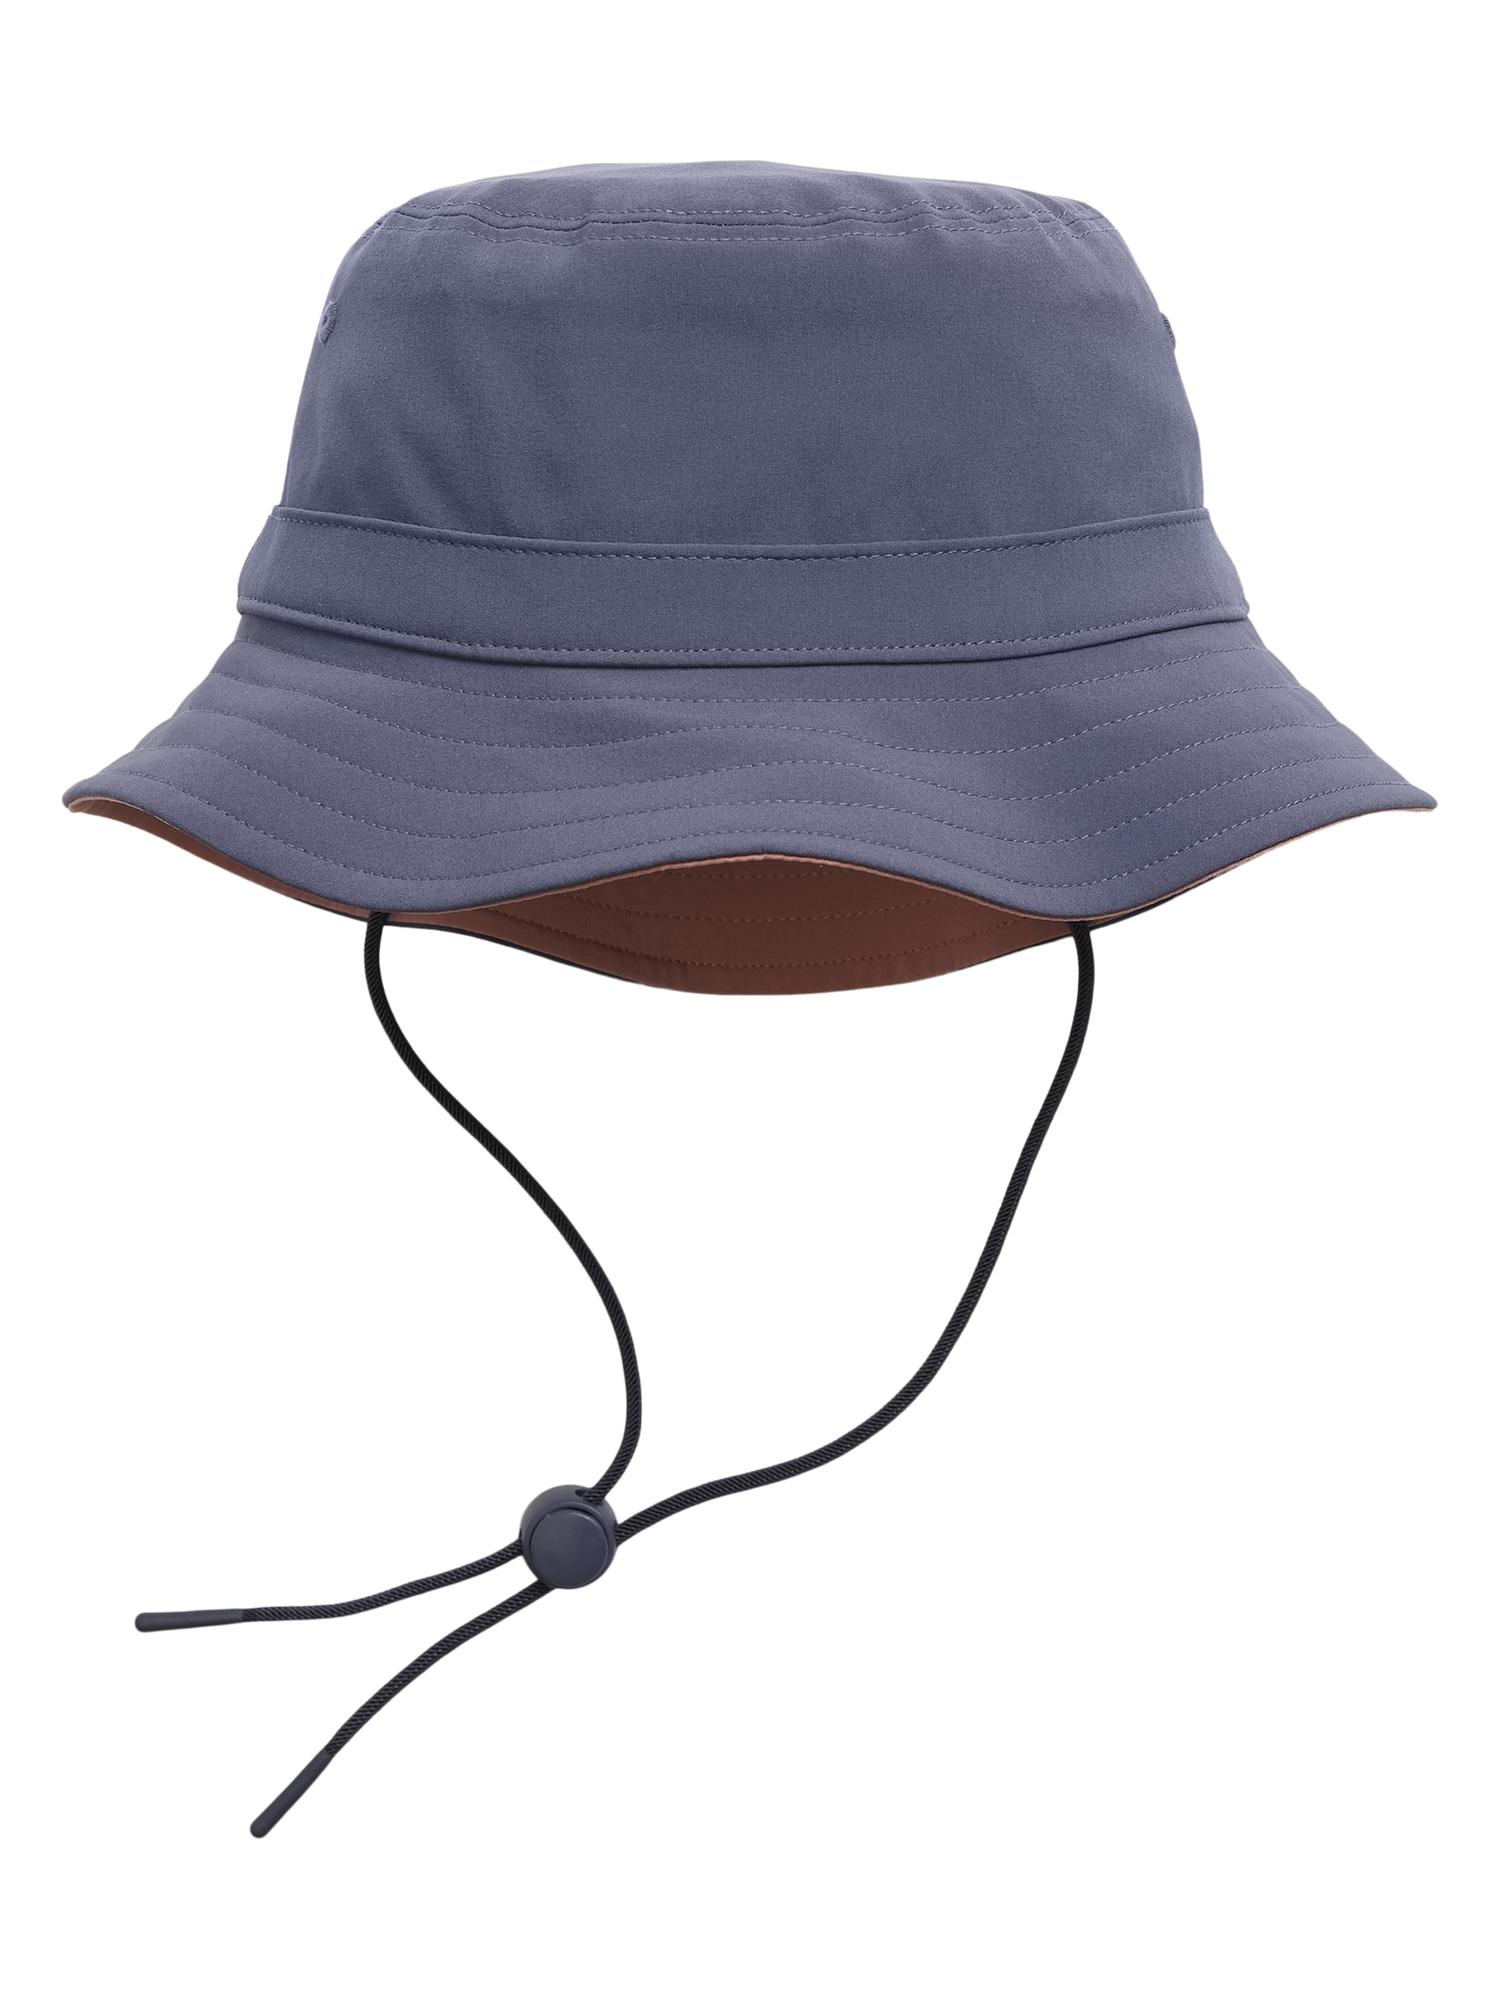 Pistil Designs Mina Sun Hat, 44% OFF